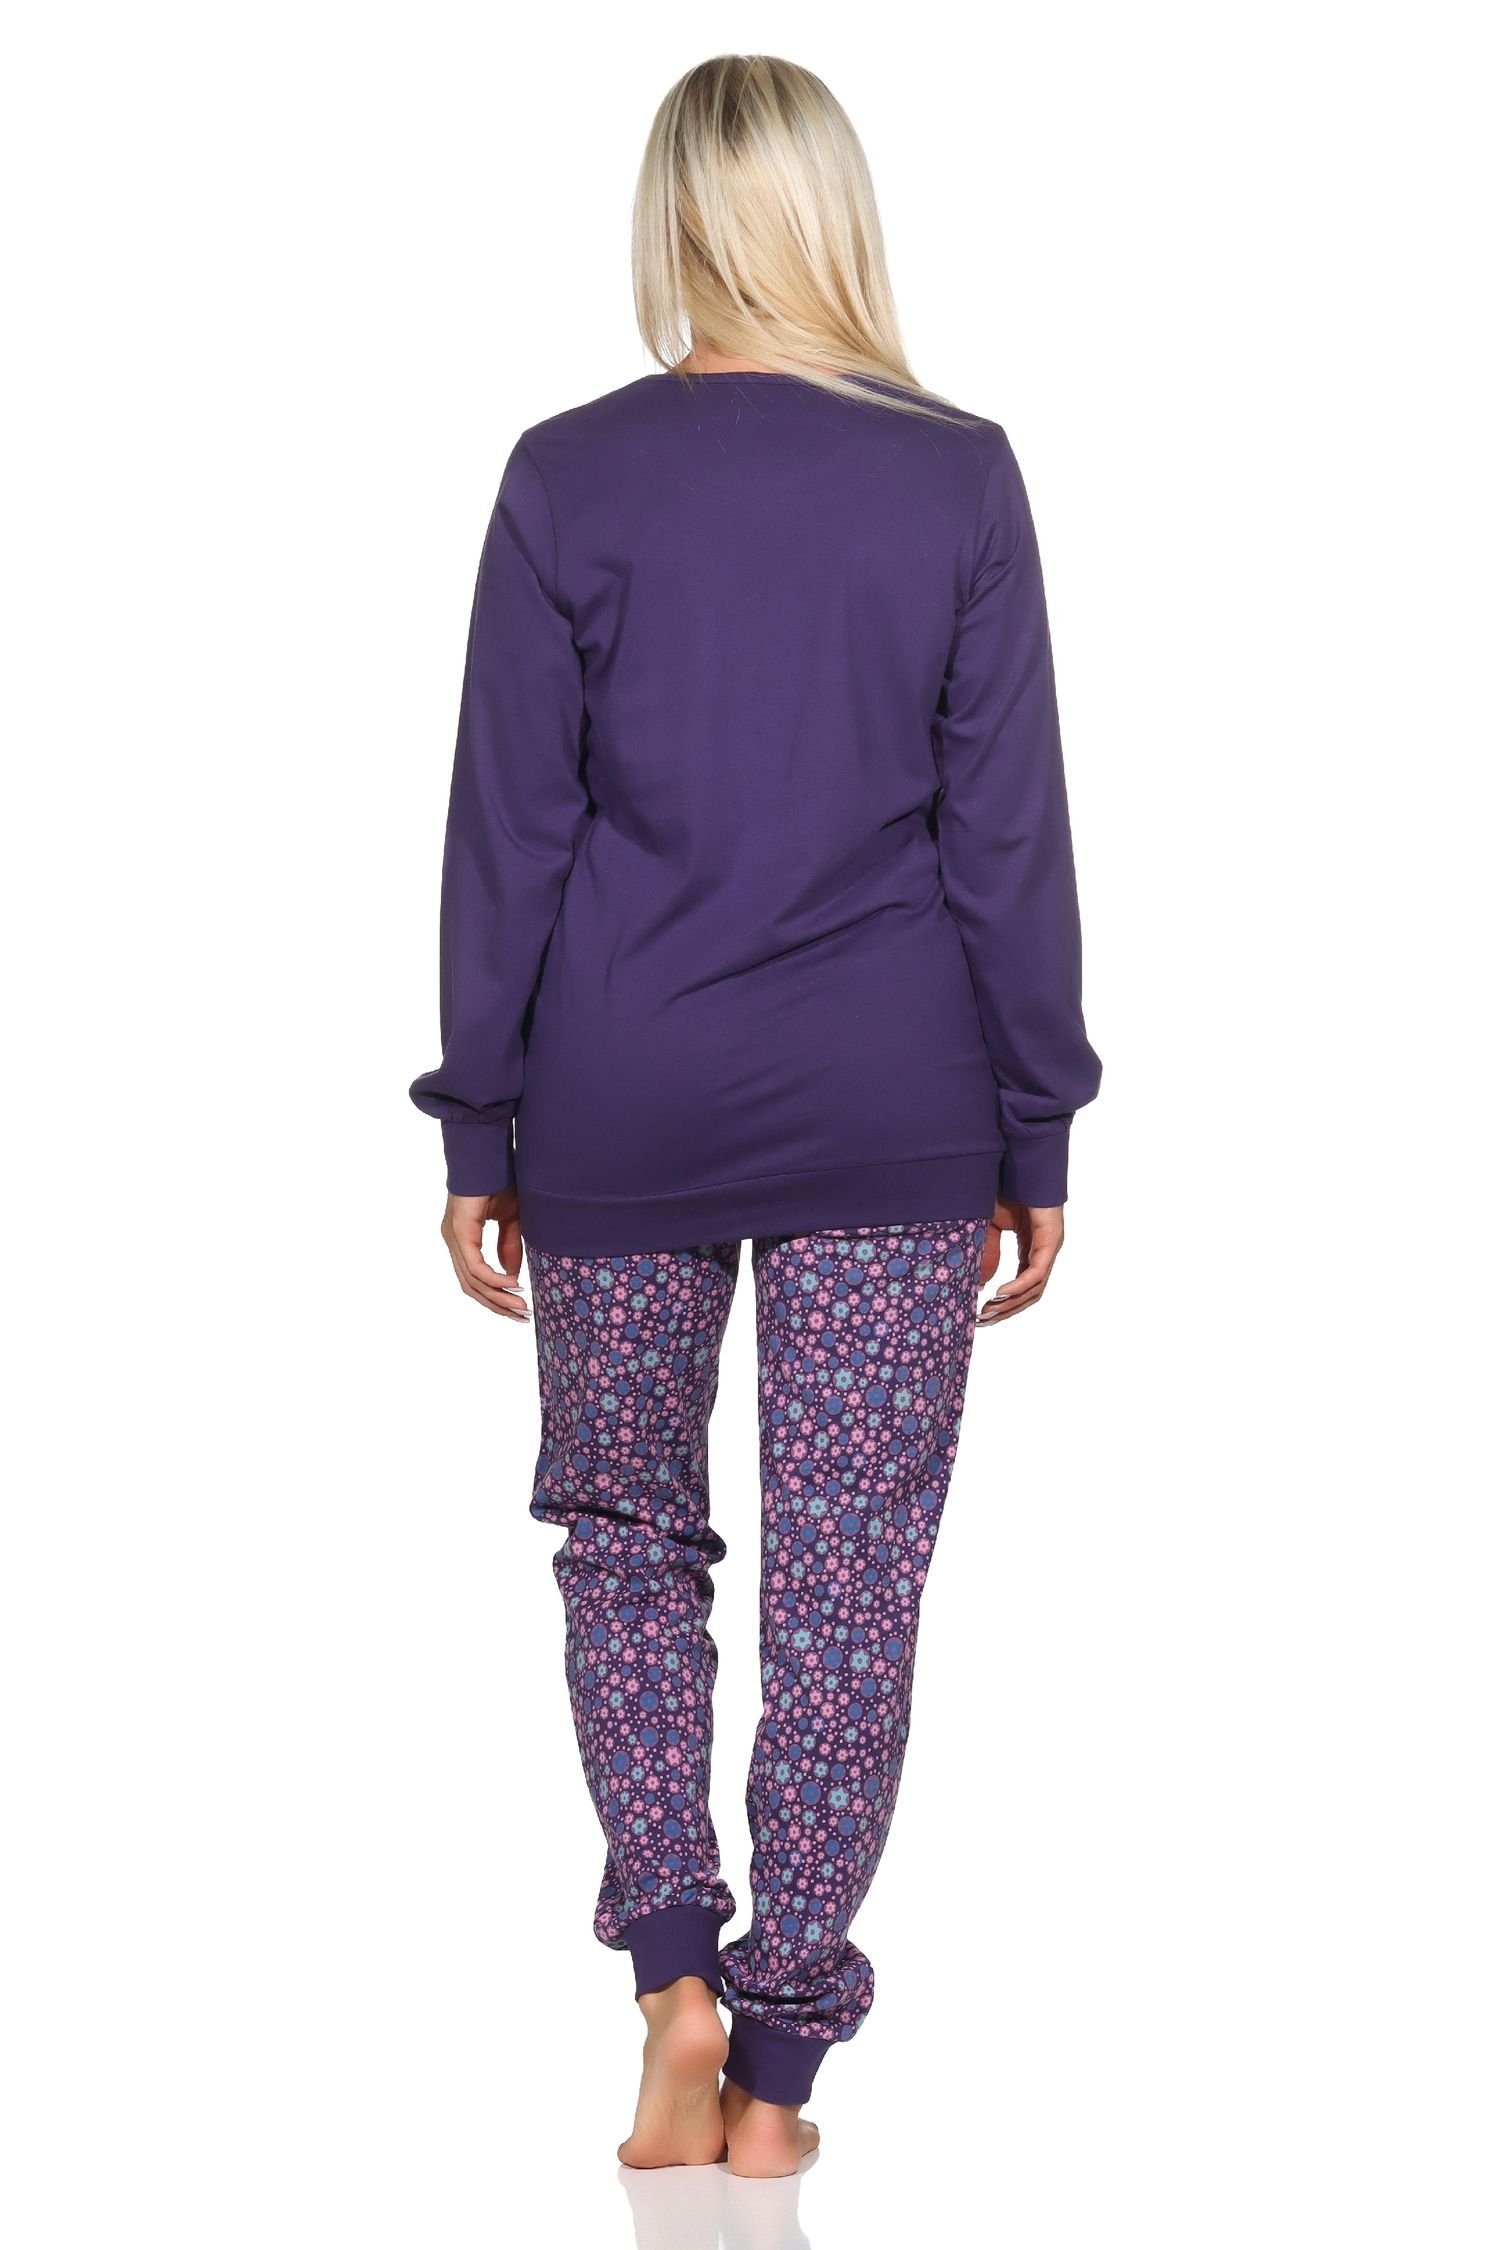 Sterne in Bündchen Schlafanzug Normann lila mit Optik langarm Pyjama Damen